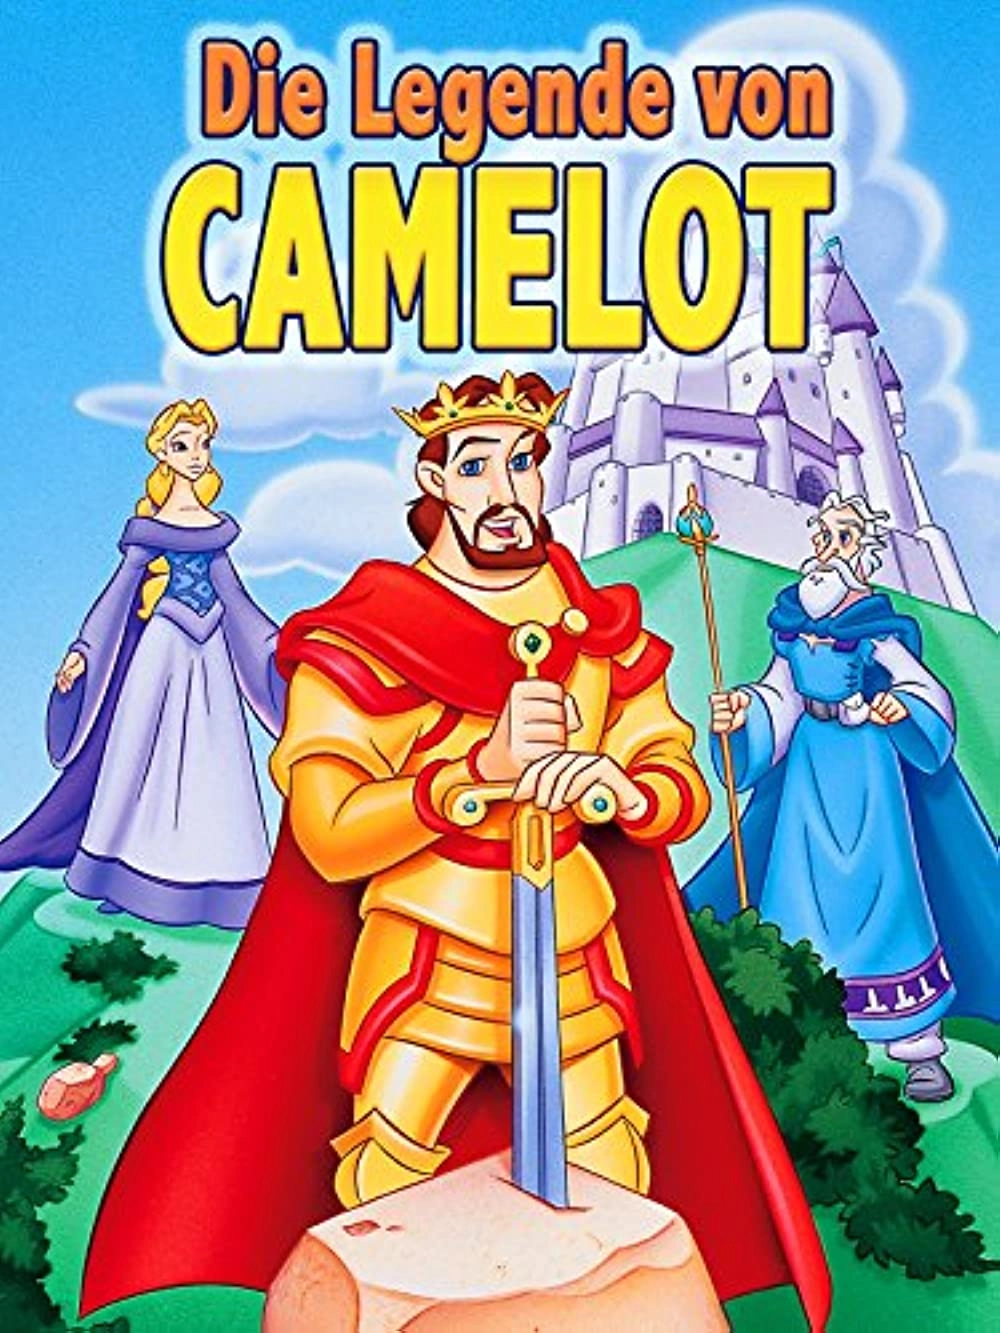 Camelot Video 1998